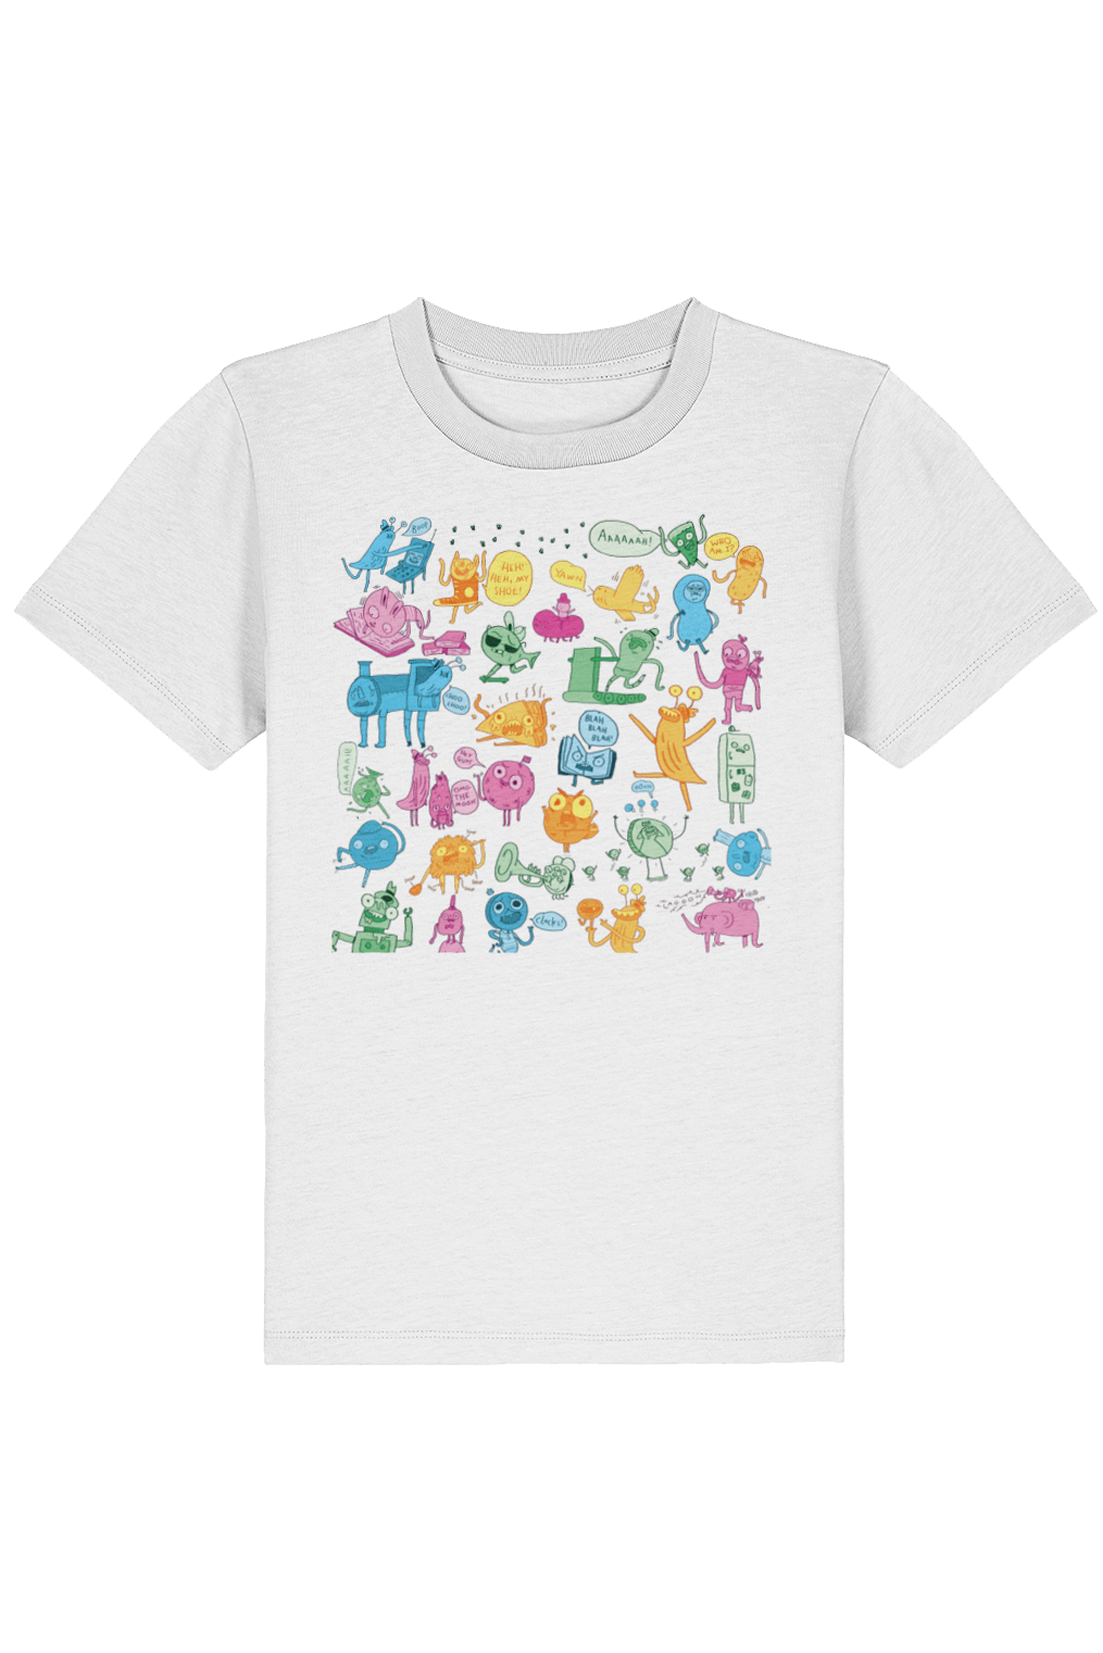 Doug Slugman P.I. Character Mix-up Mono kids t-shirt